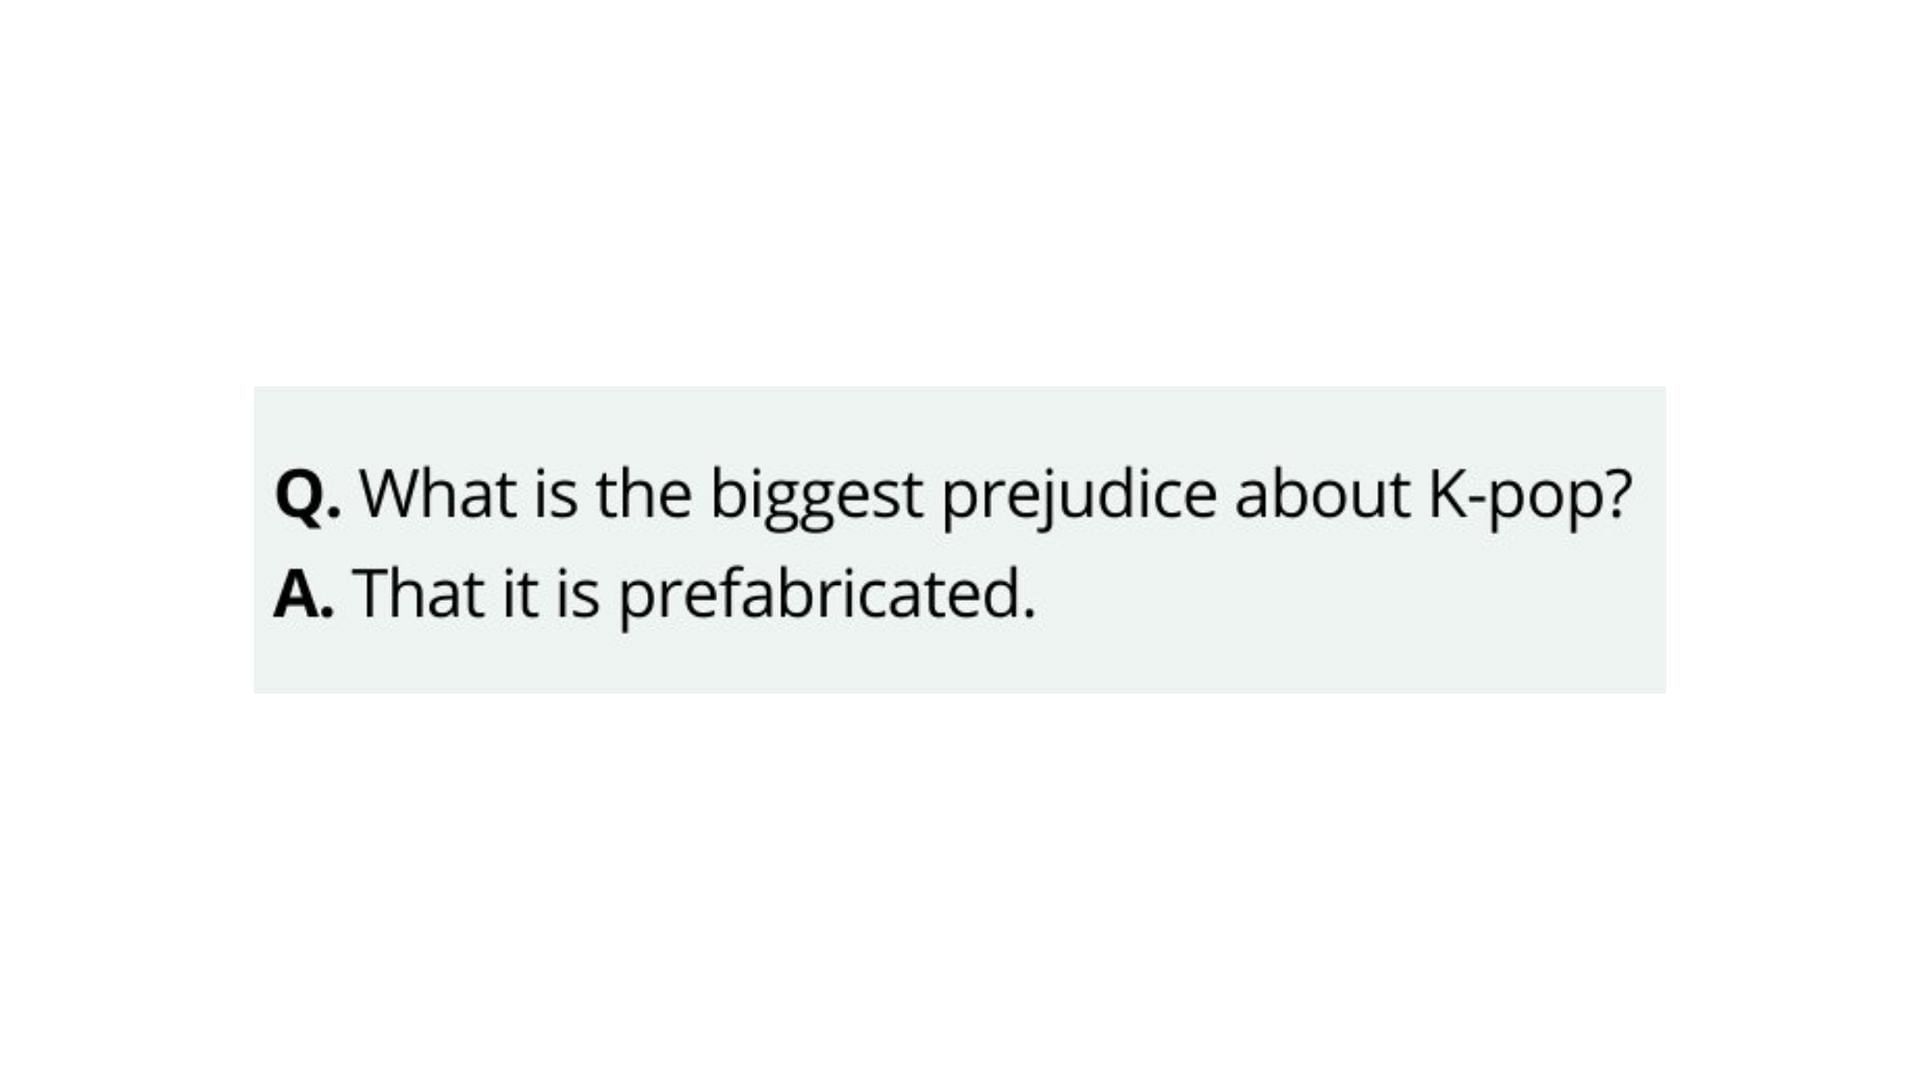 BTS&#039; RM speaks about K-pop in Spanish interview (Image via Twitter)